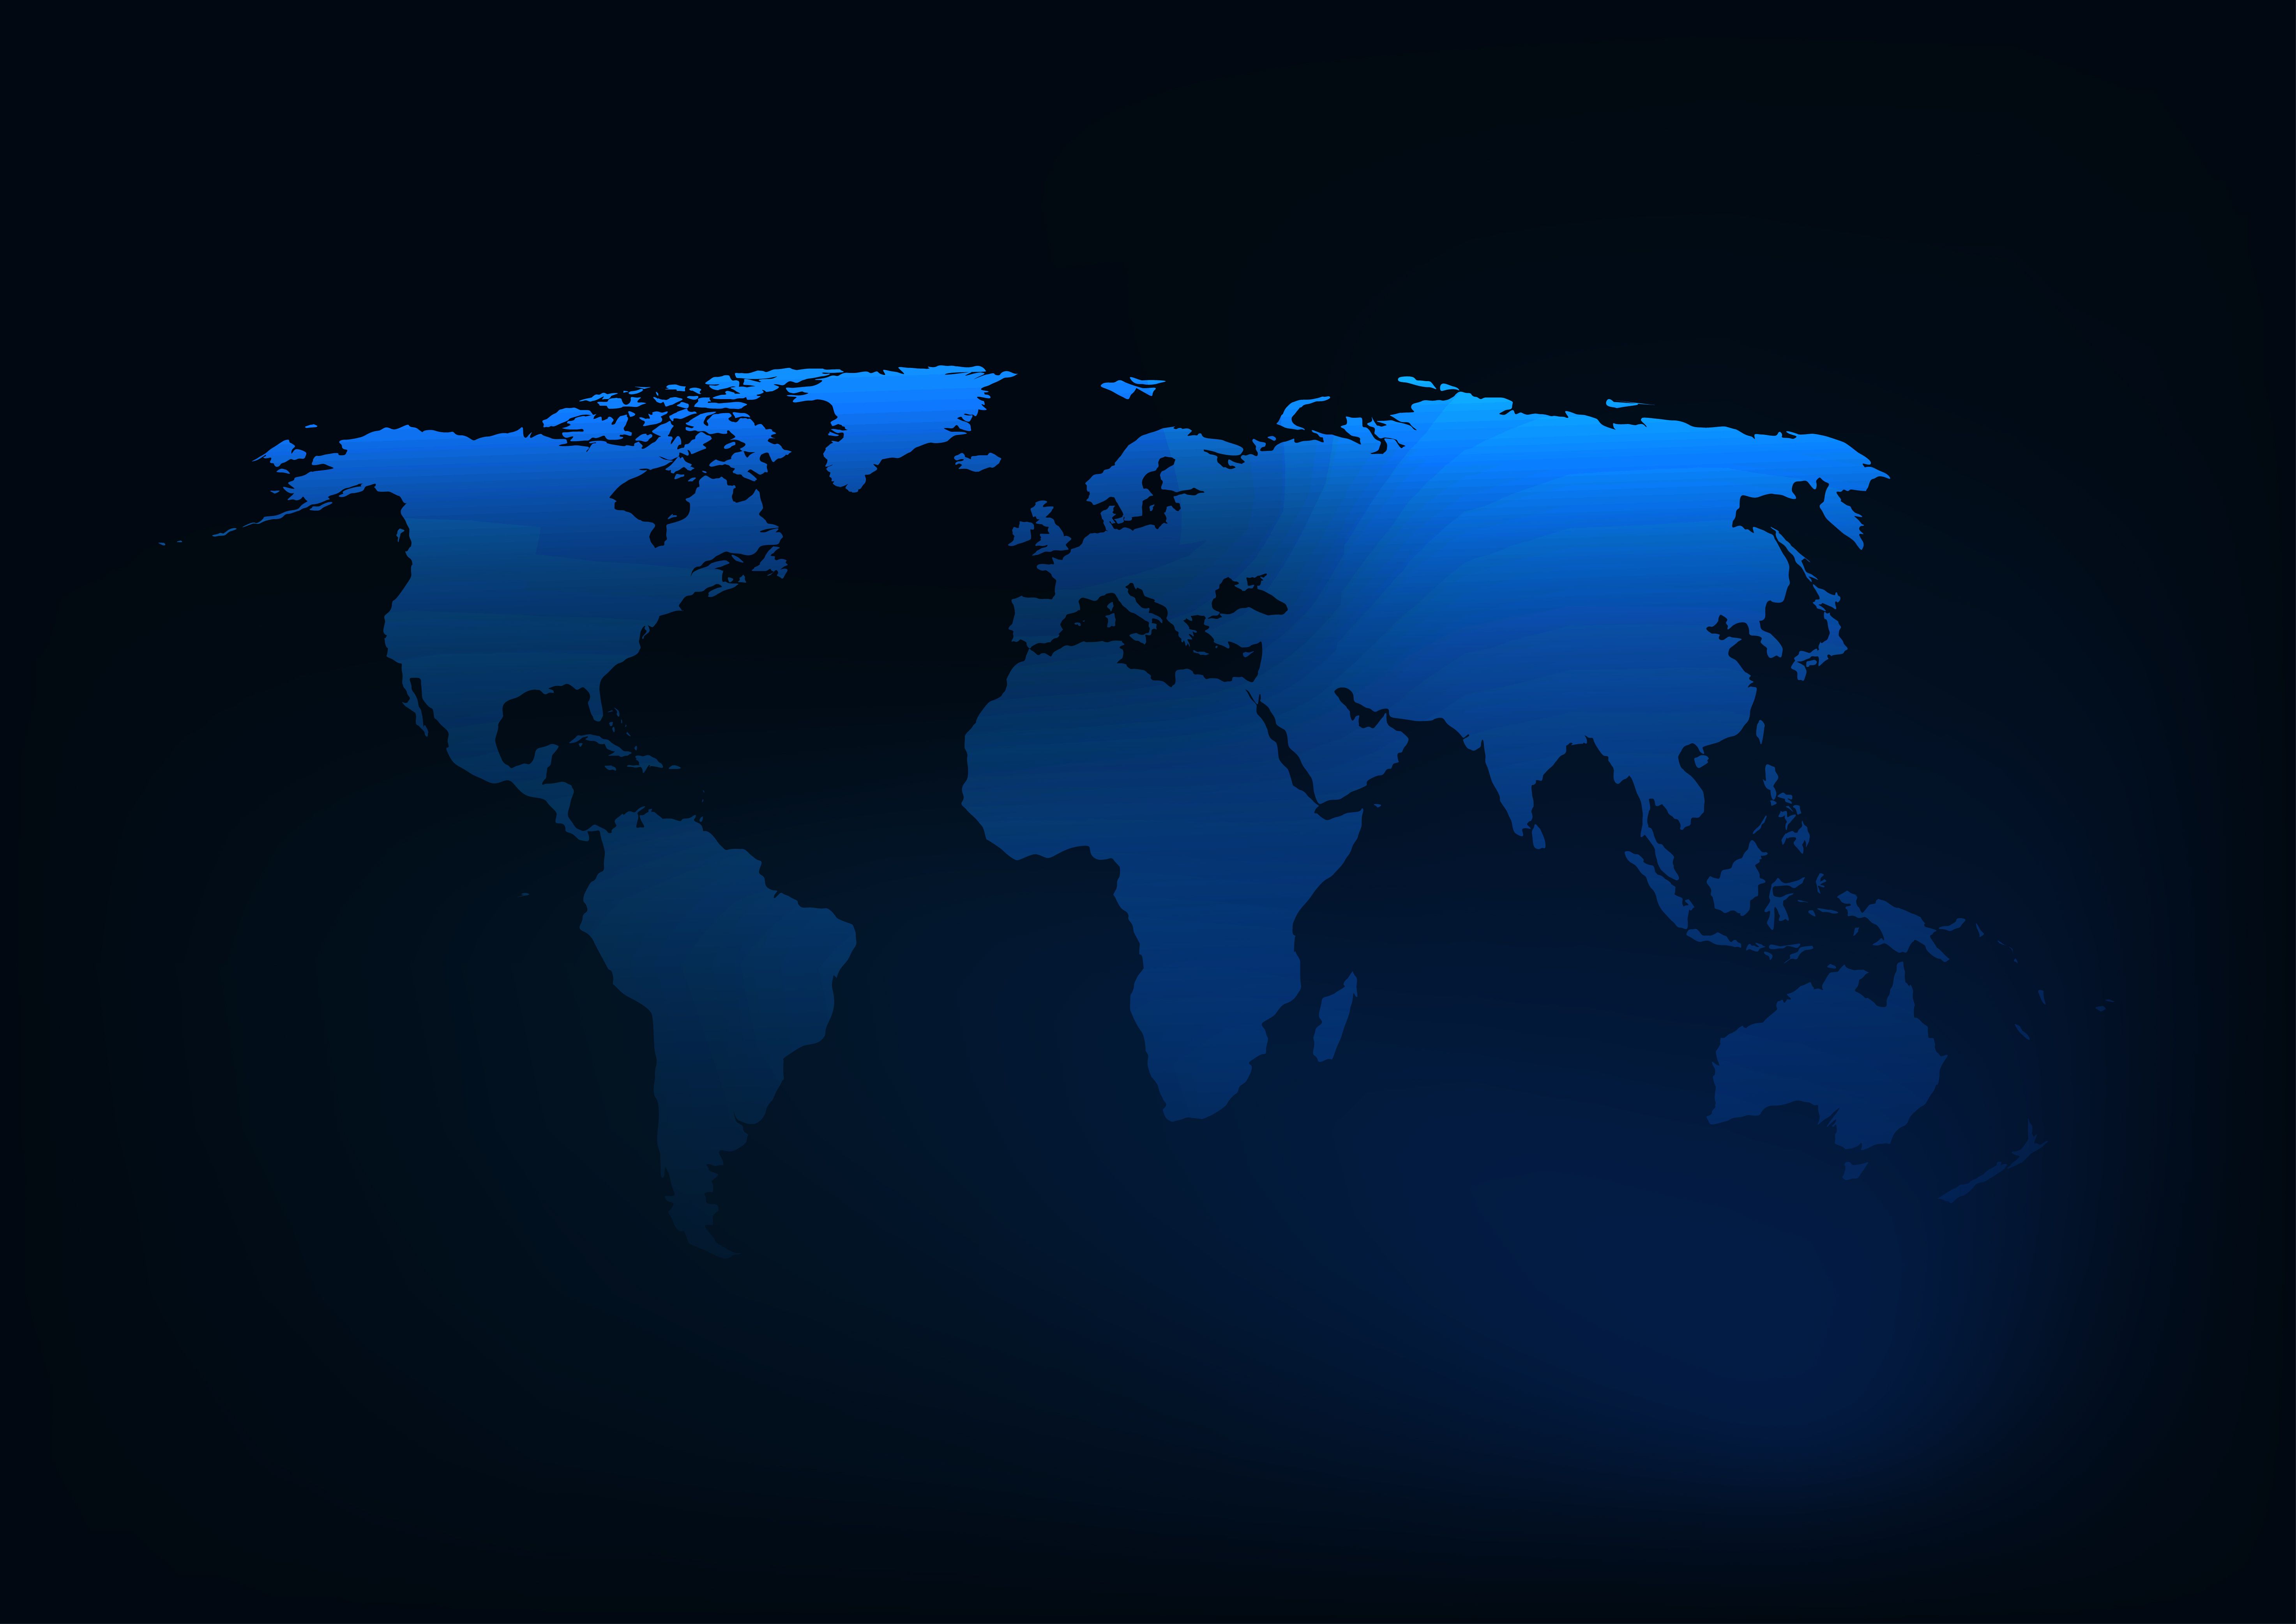 Futuristic glowing dark blue world map silhouette Free Vectors, Clipart Graphics & Vector Art